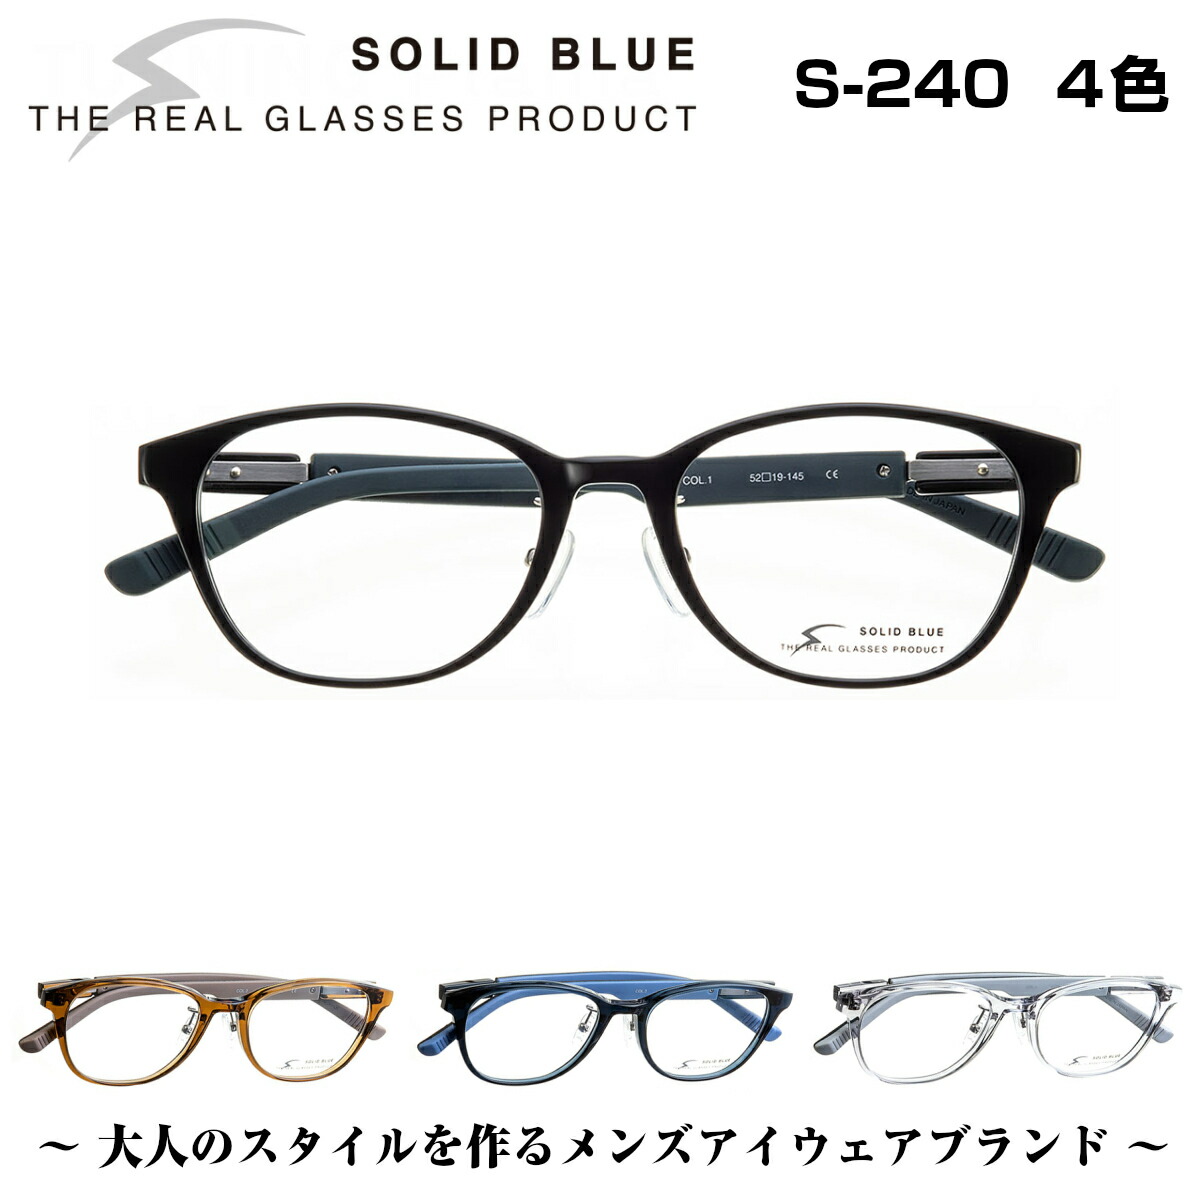 The 正規品バッグ 小物 ブランド雑貨 Real 眼鏡 サングラス Glasses Product 大人の男のメガネフレーム ソリッドブルー 鯖江 Solid Blue S 240 ソリッドブルー Solid Blue S 240 4色 男性 メンズ ビジネス フォーマル カジュアル セル メタル チタン コンビネーション